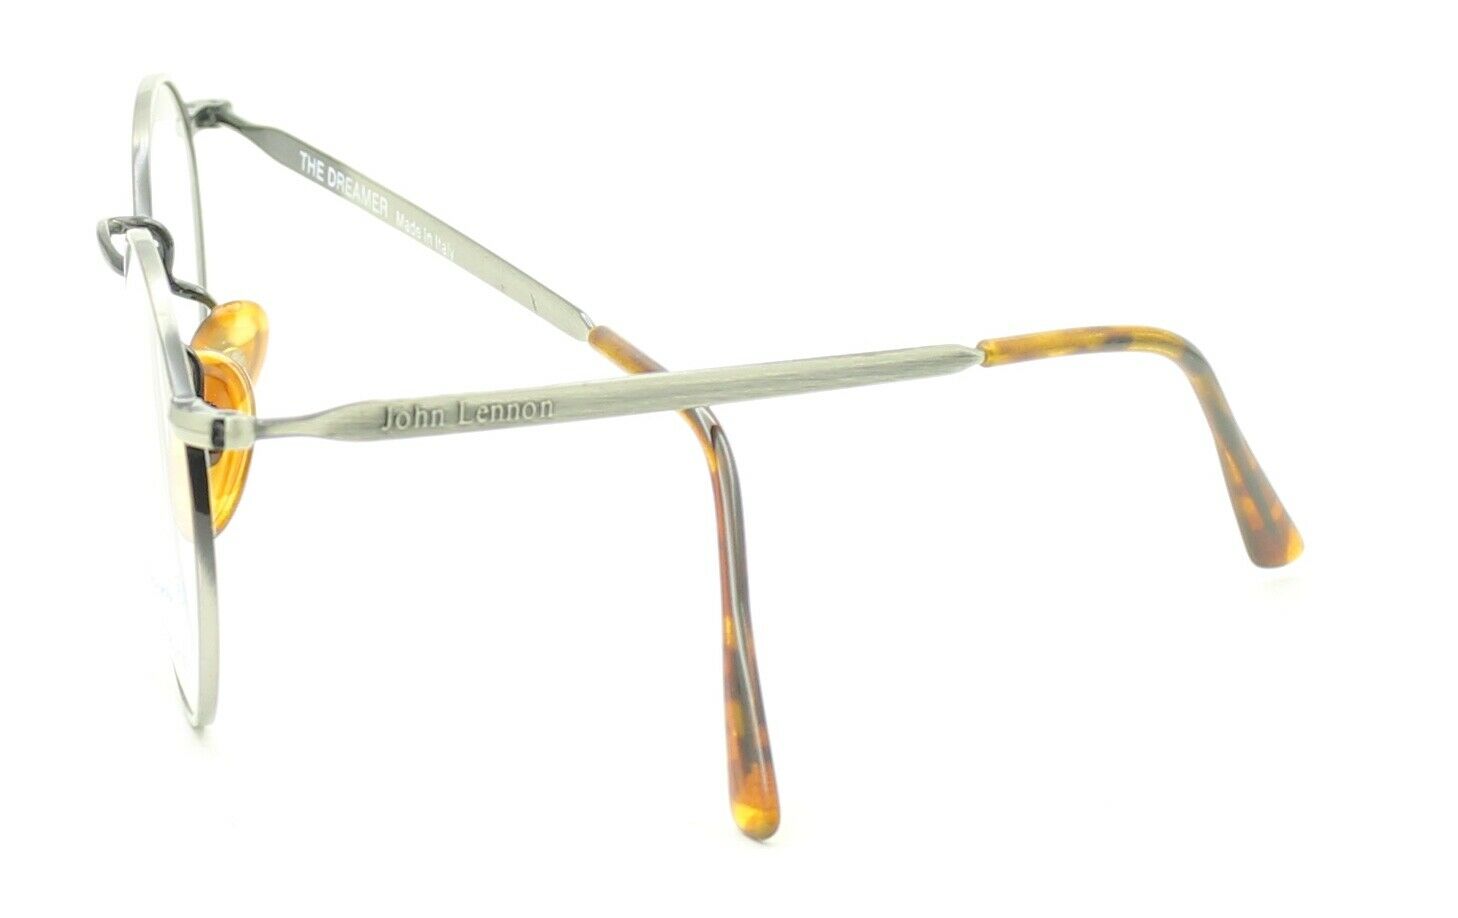 JOHN LENNON JL-02 20 THE DREAMER Vintage Gents Eyewear RX Optical FRAMES Glasses